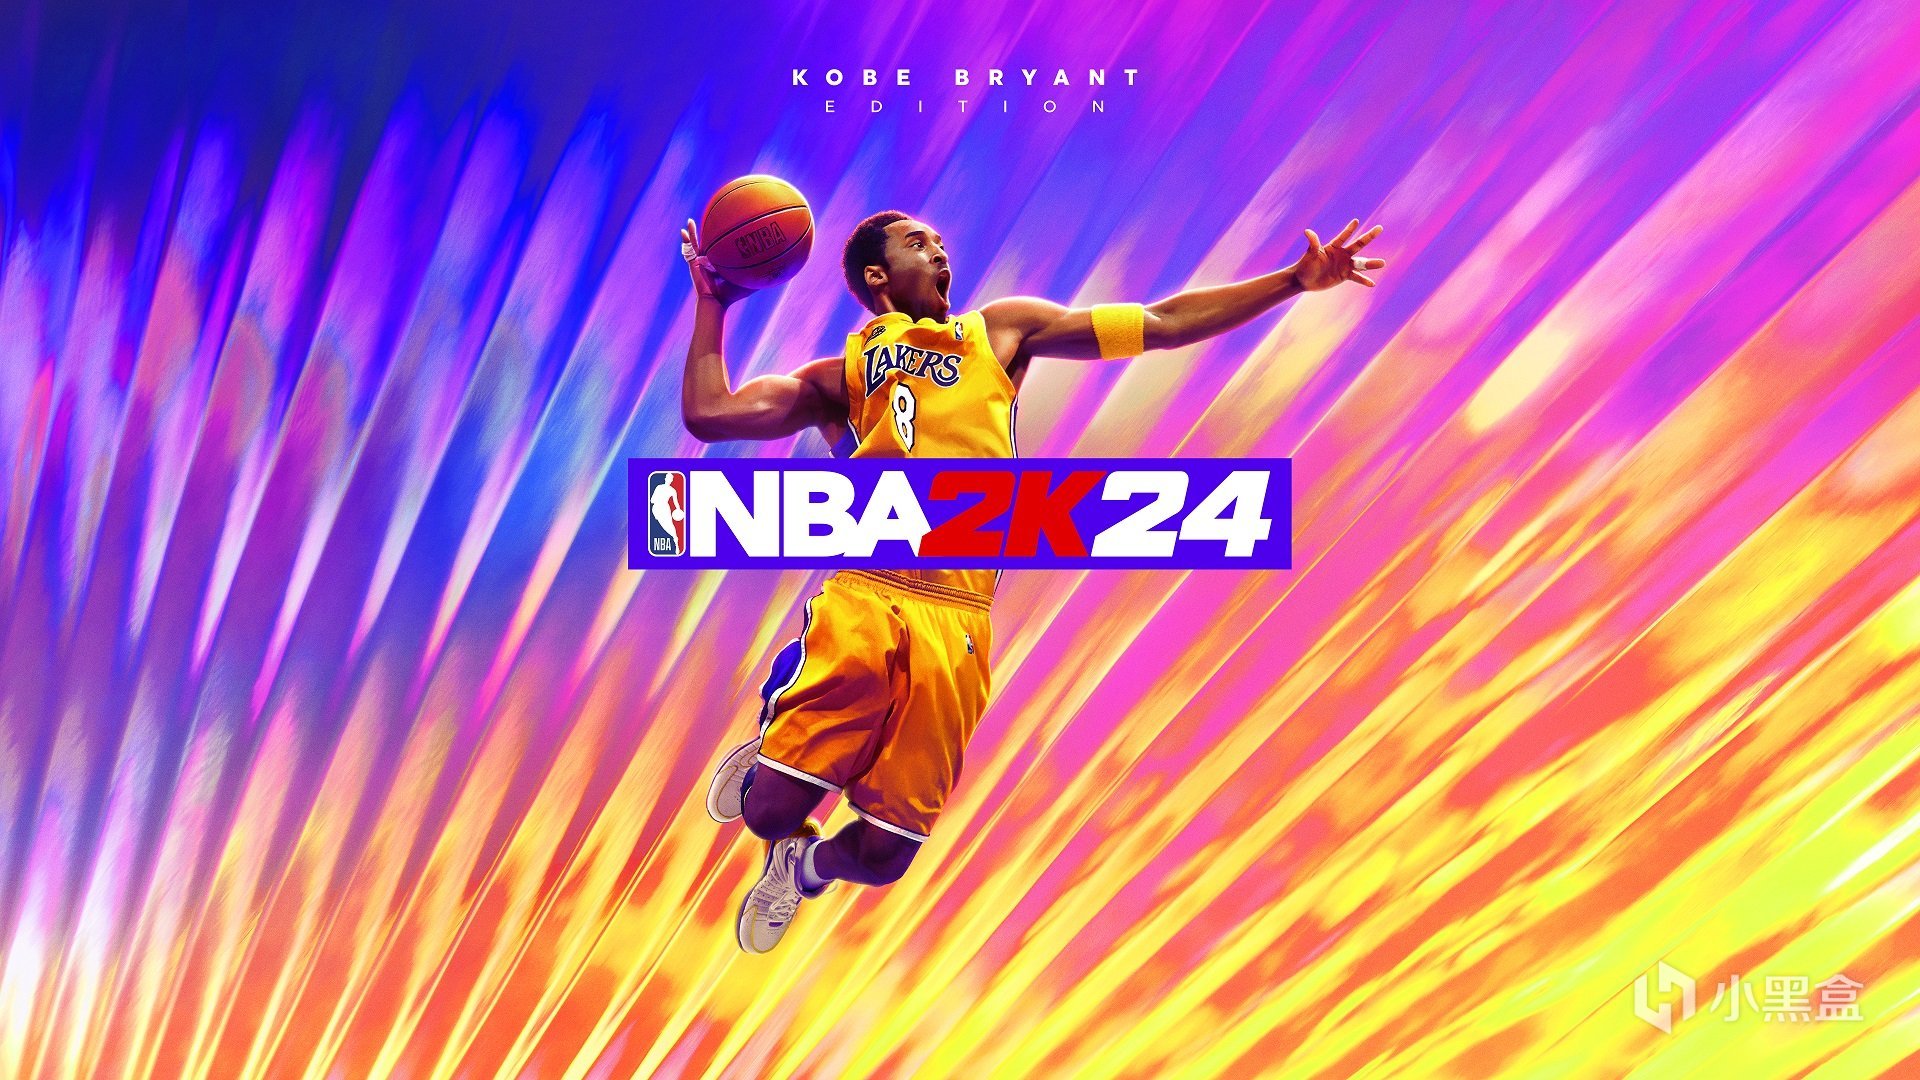 【PC游戏】约战球场: 《NBA 2K24》庆祝传奇球员科比·布莱恩特成为封面人物-第0张